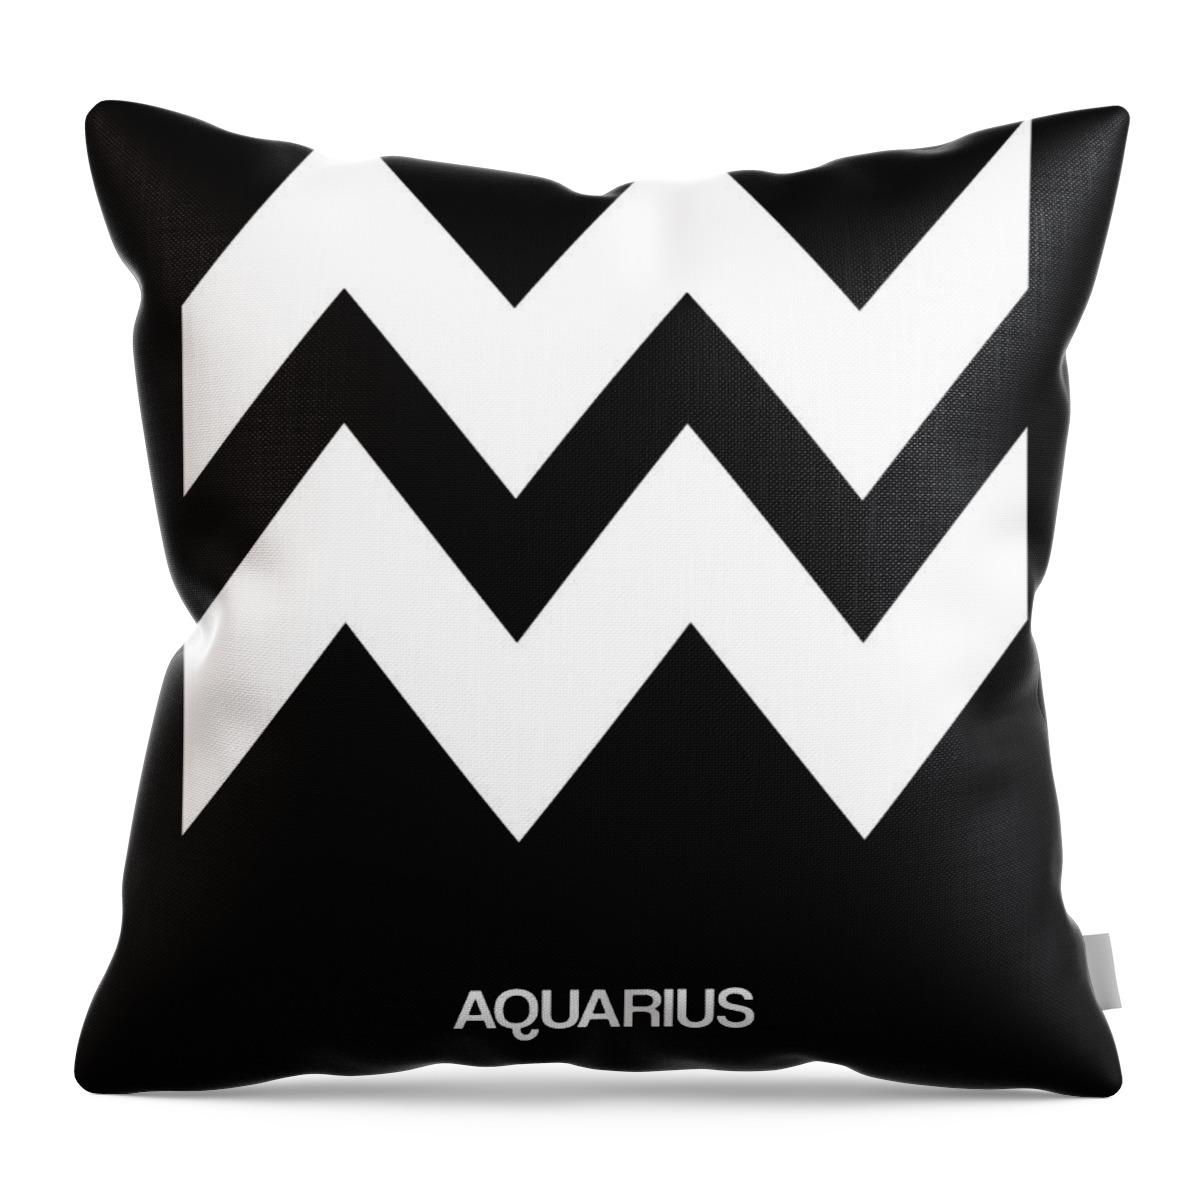 Aquarius Throw Pillow featuring the digital art Aquarius Zodiac Sign White by Naxart Studio